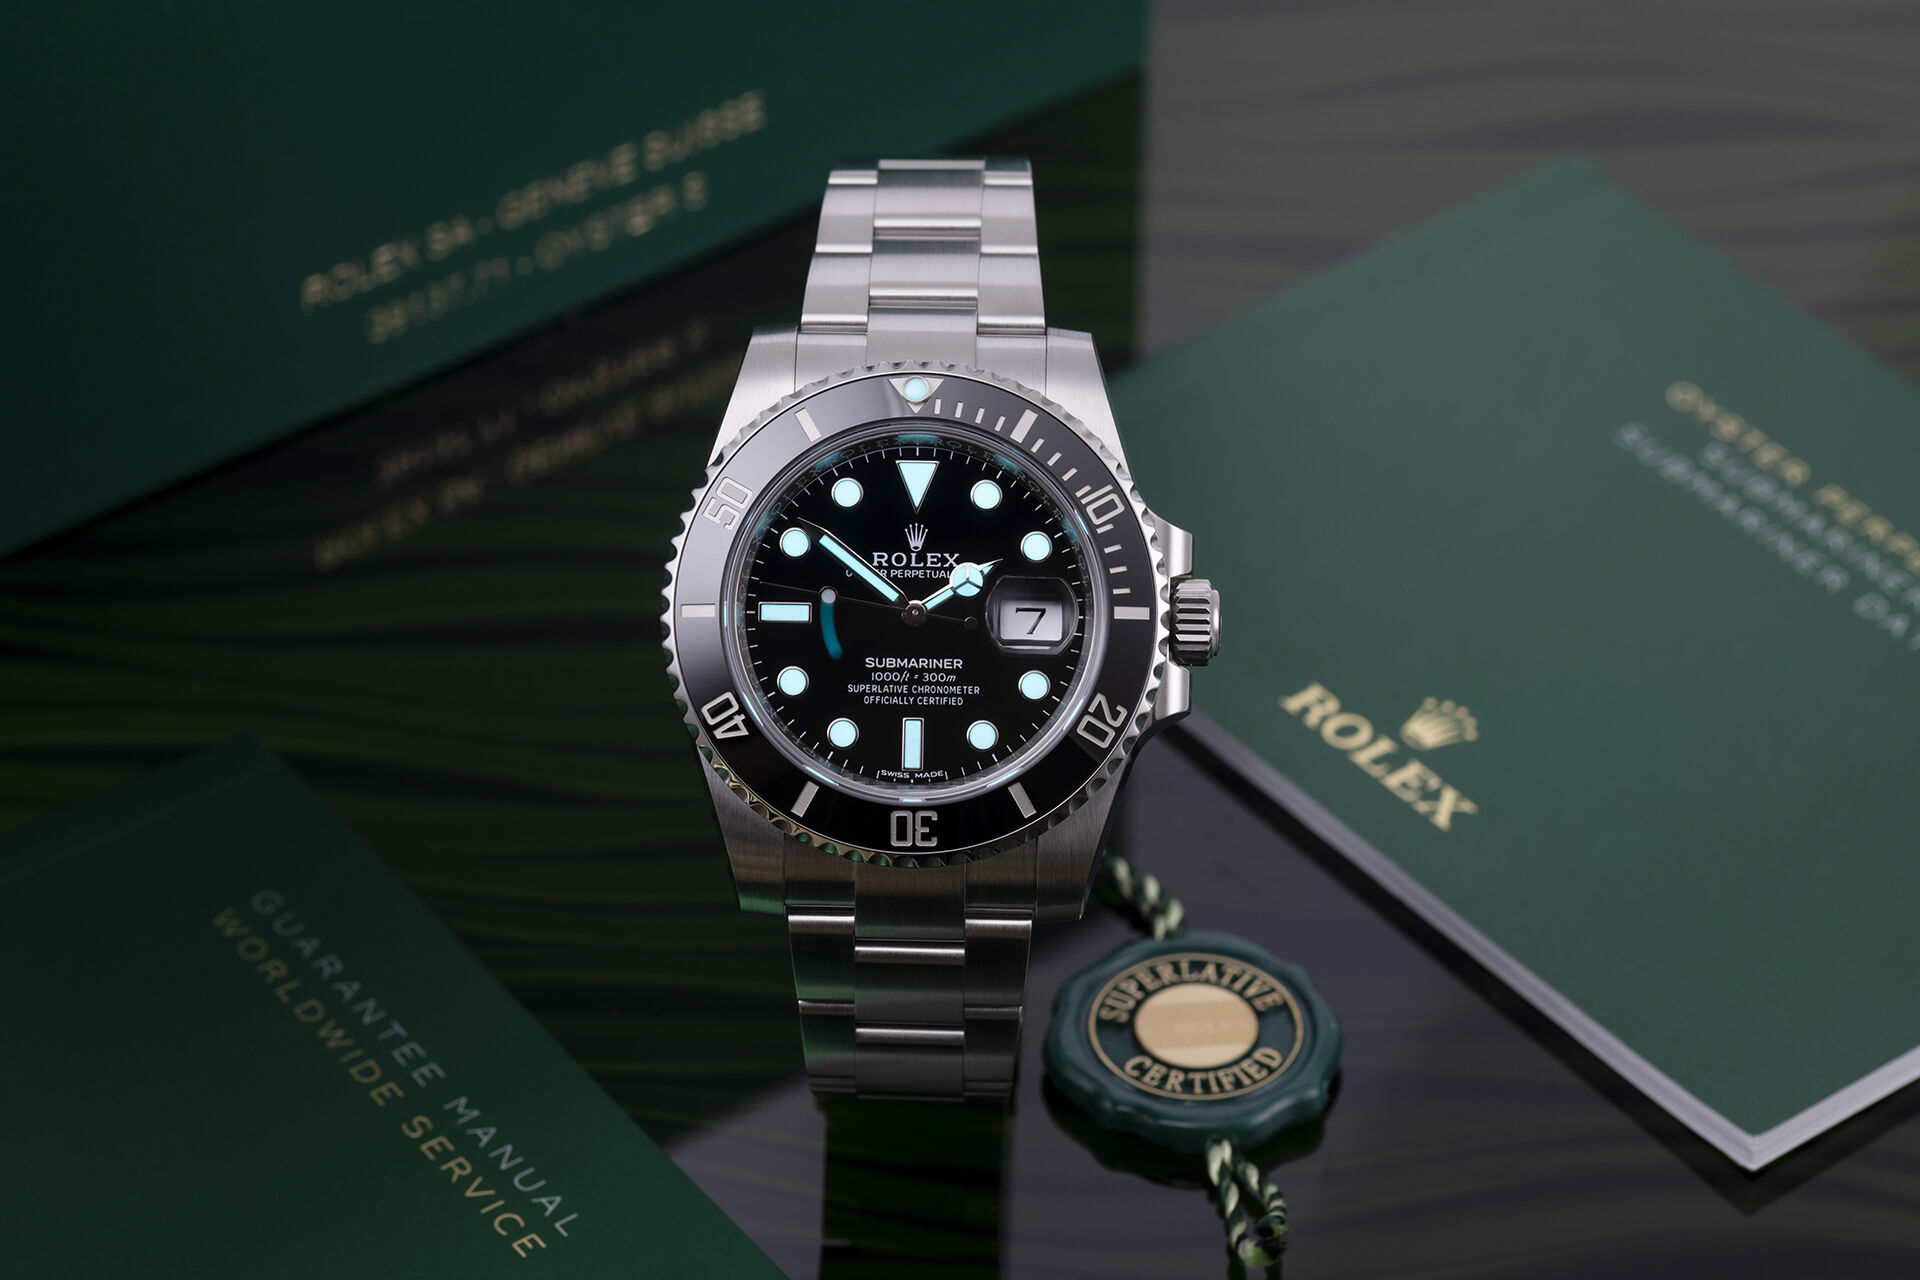 ref 116610LN | UK Retailed | Rolex Submariner Date